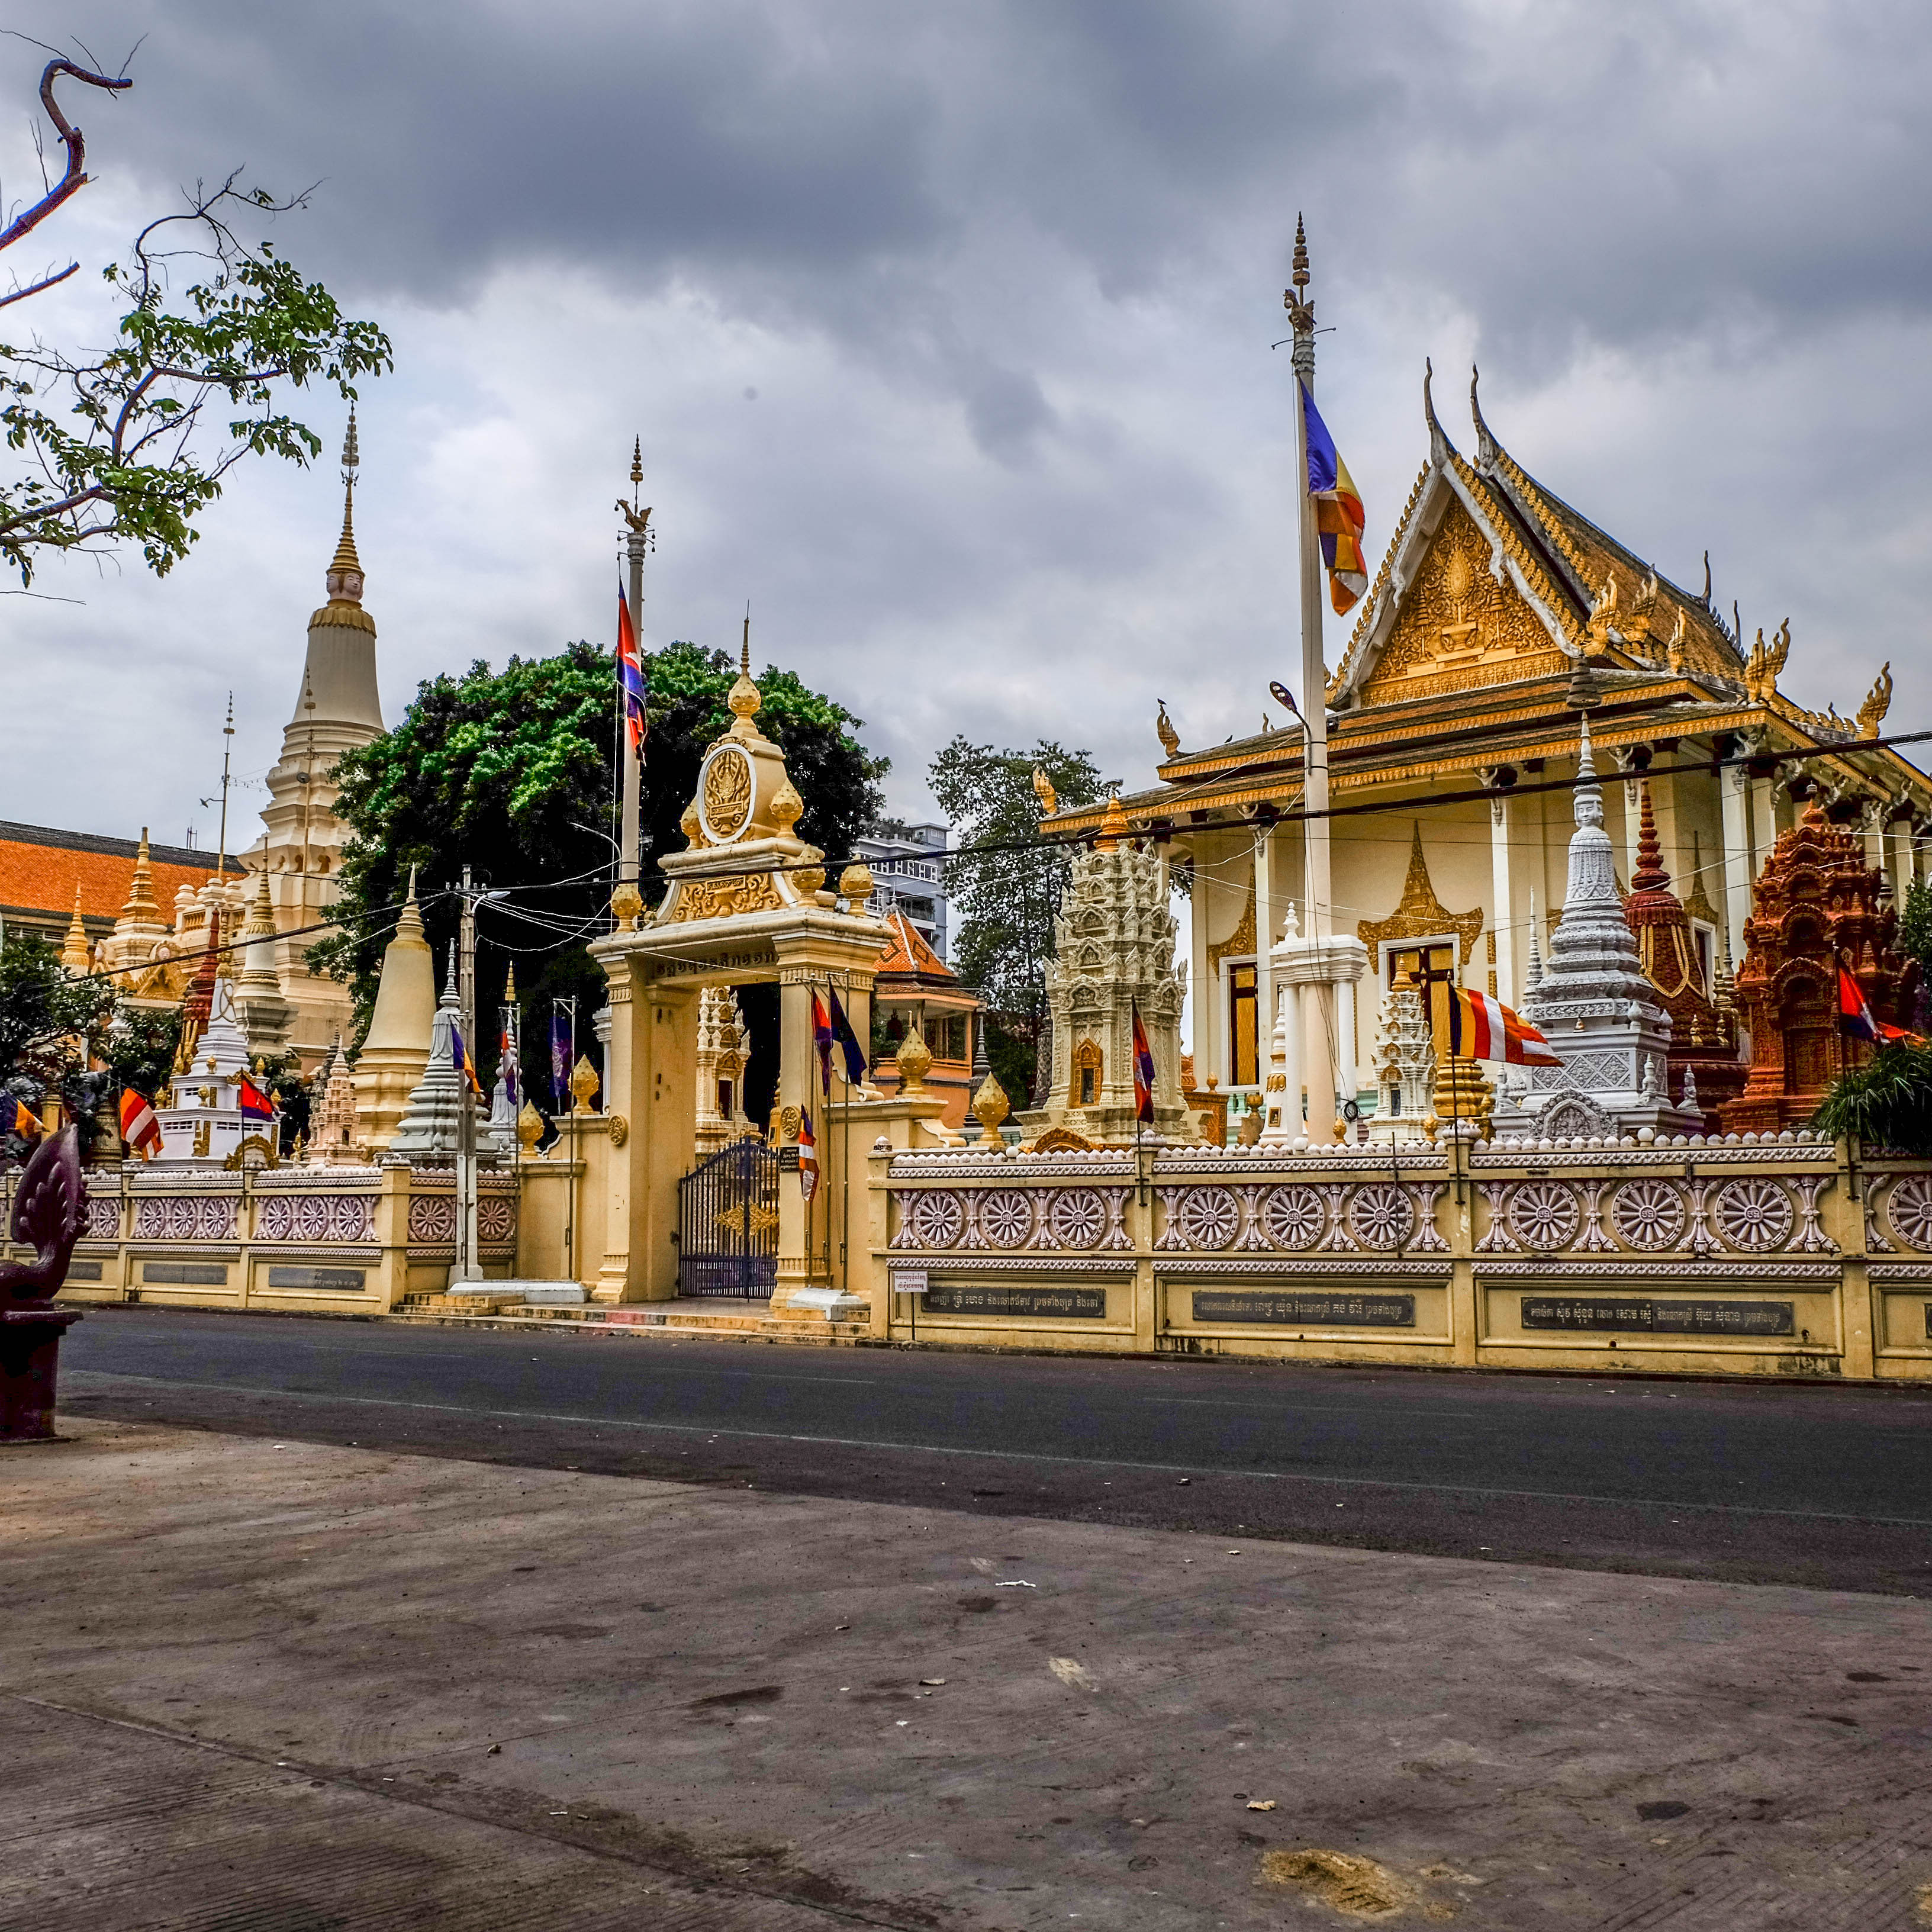 Phnom Penh Architecture - Wat Bokum Temple